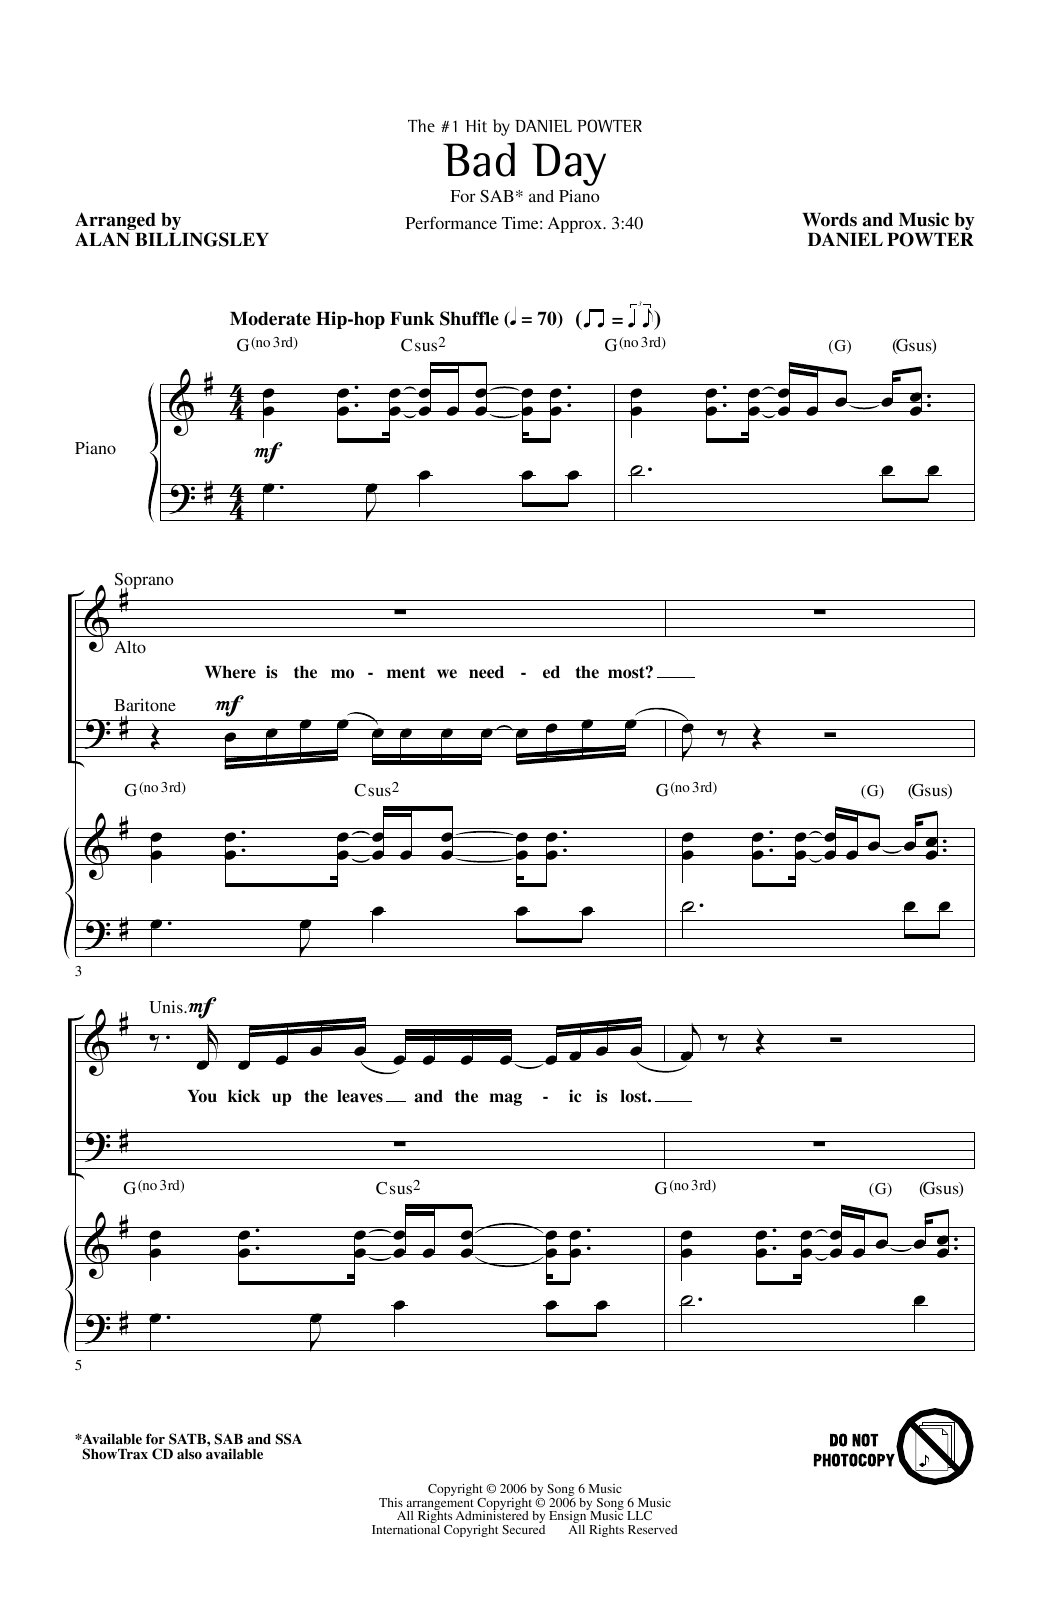 Daniel Powter Bad Day (arr. Alan Billingsley) Sheet Music Notes & Chords for SAB Choir - Download or Print PDF